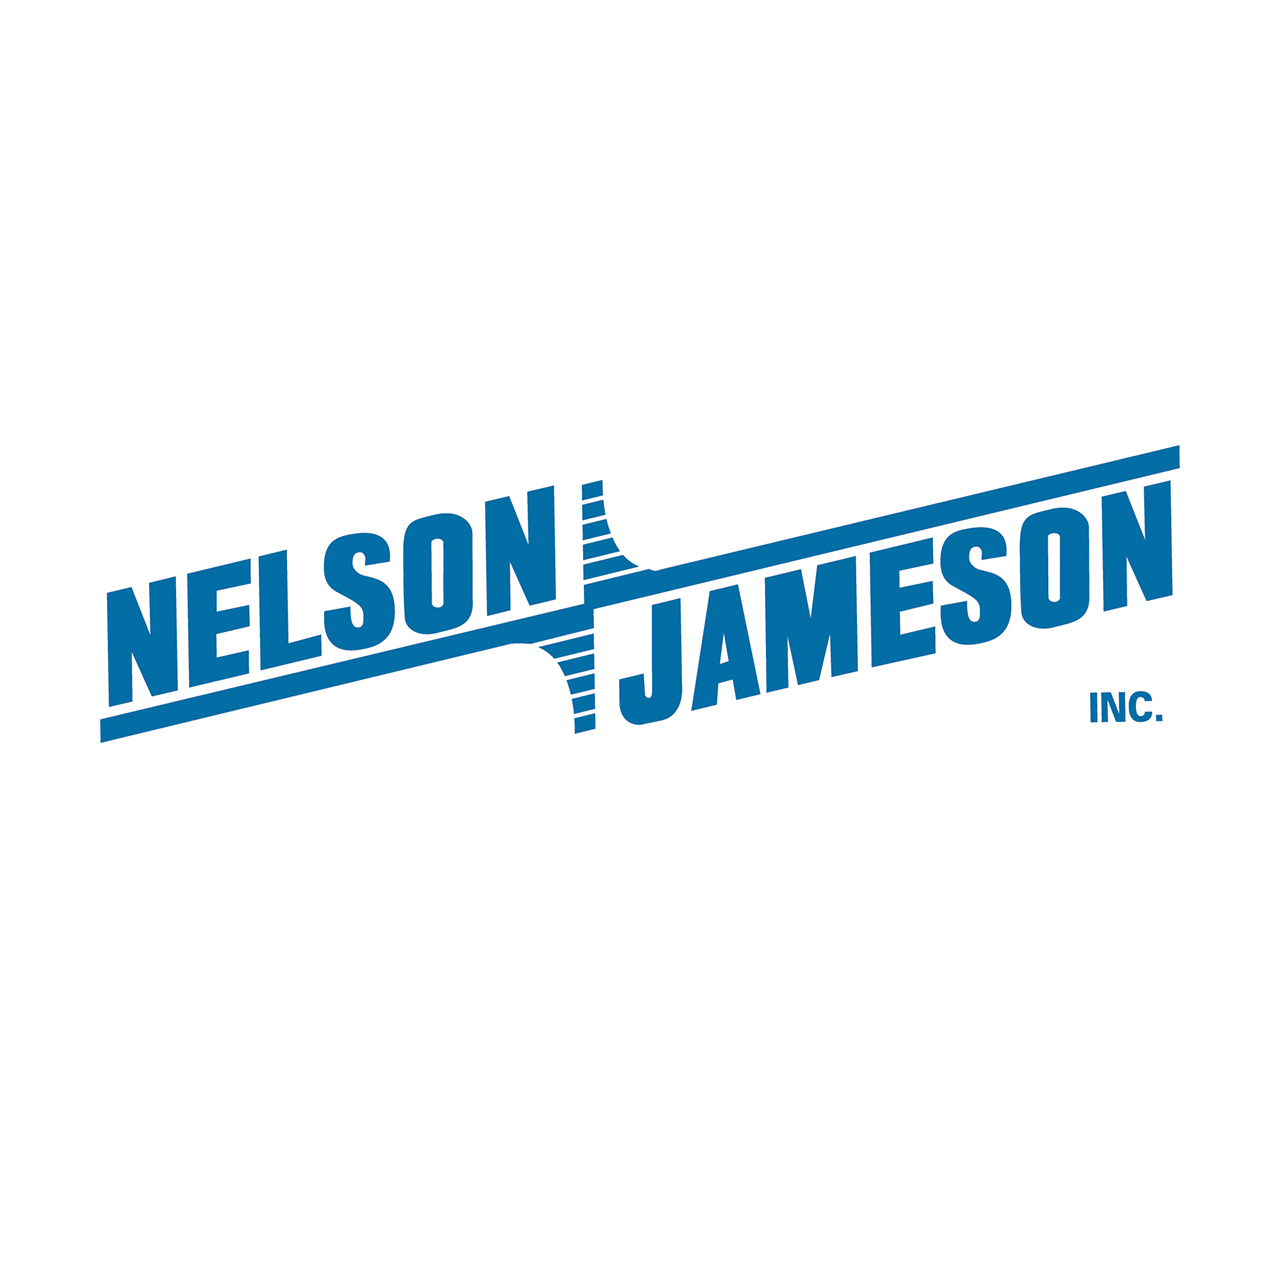 Nelson-Jameson Universal Manhole Gaskets